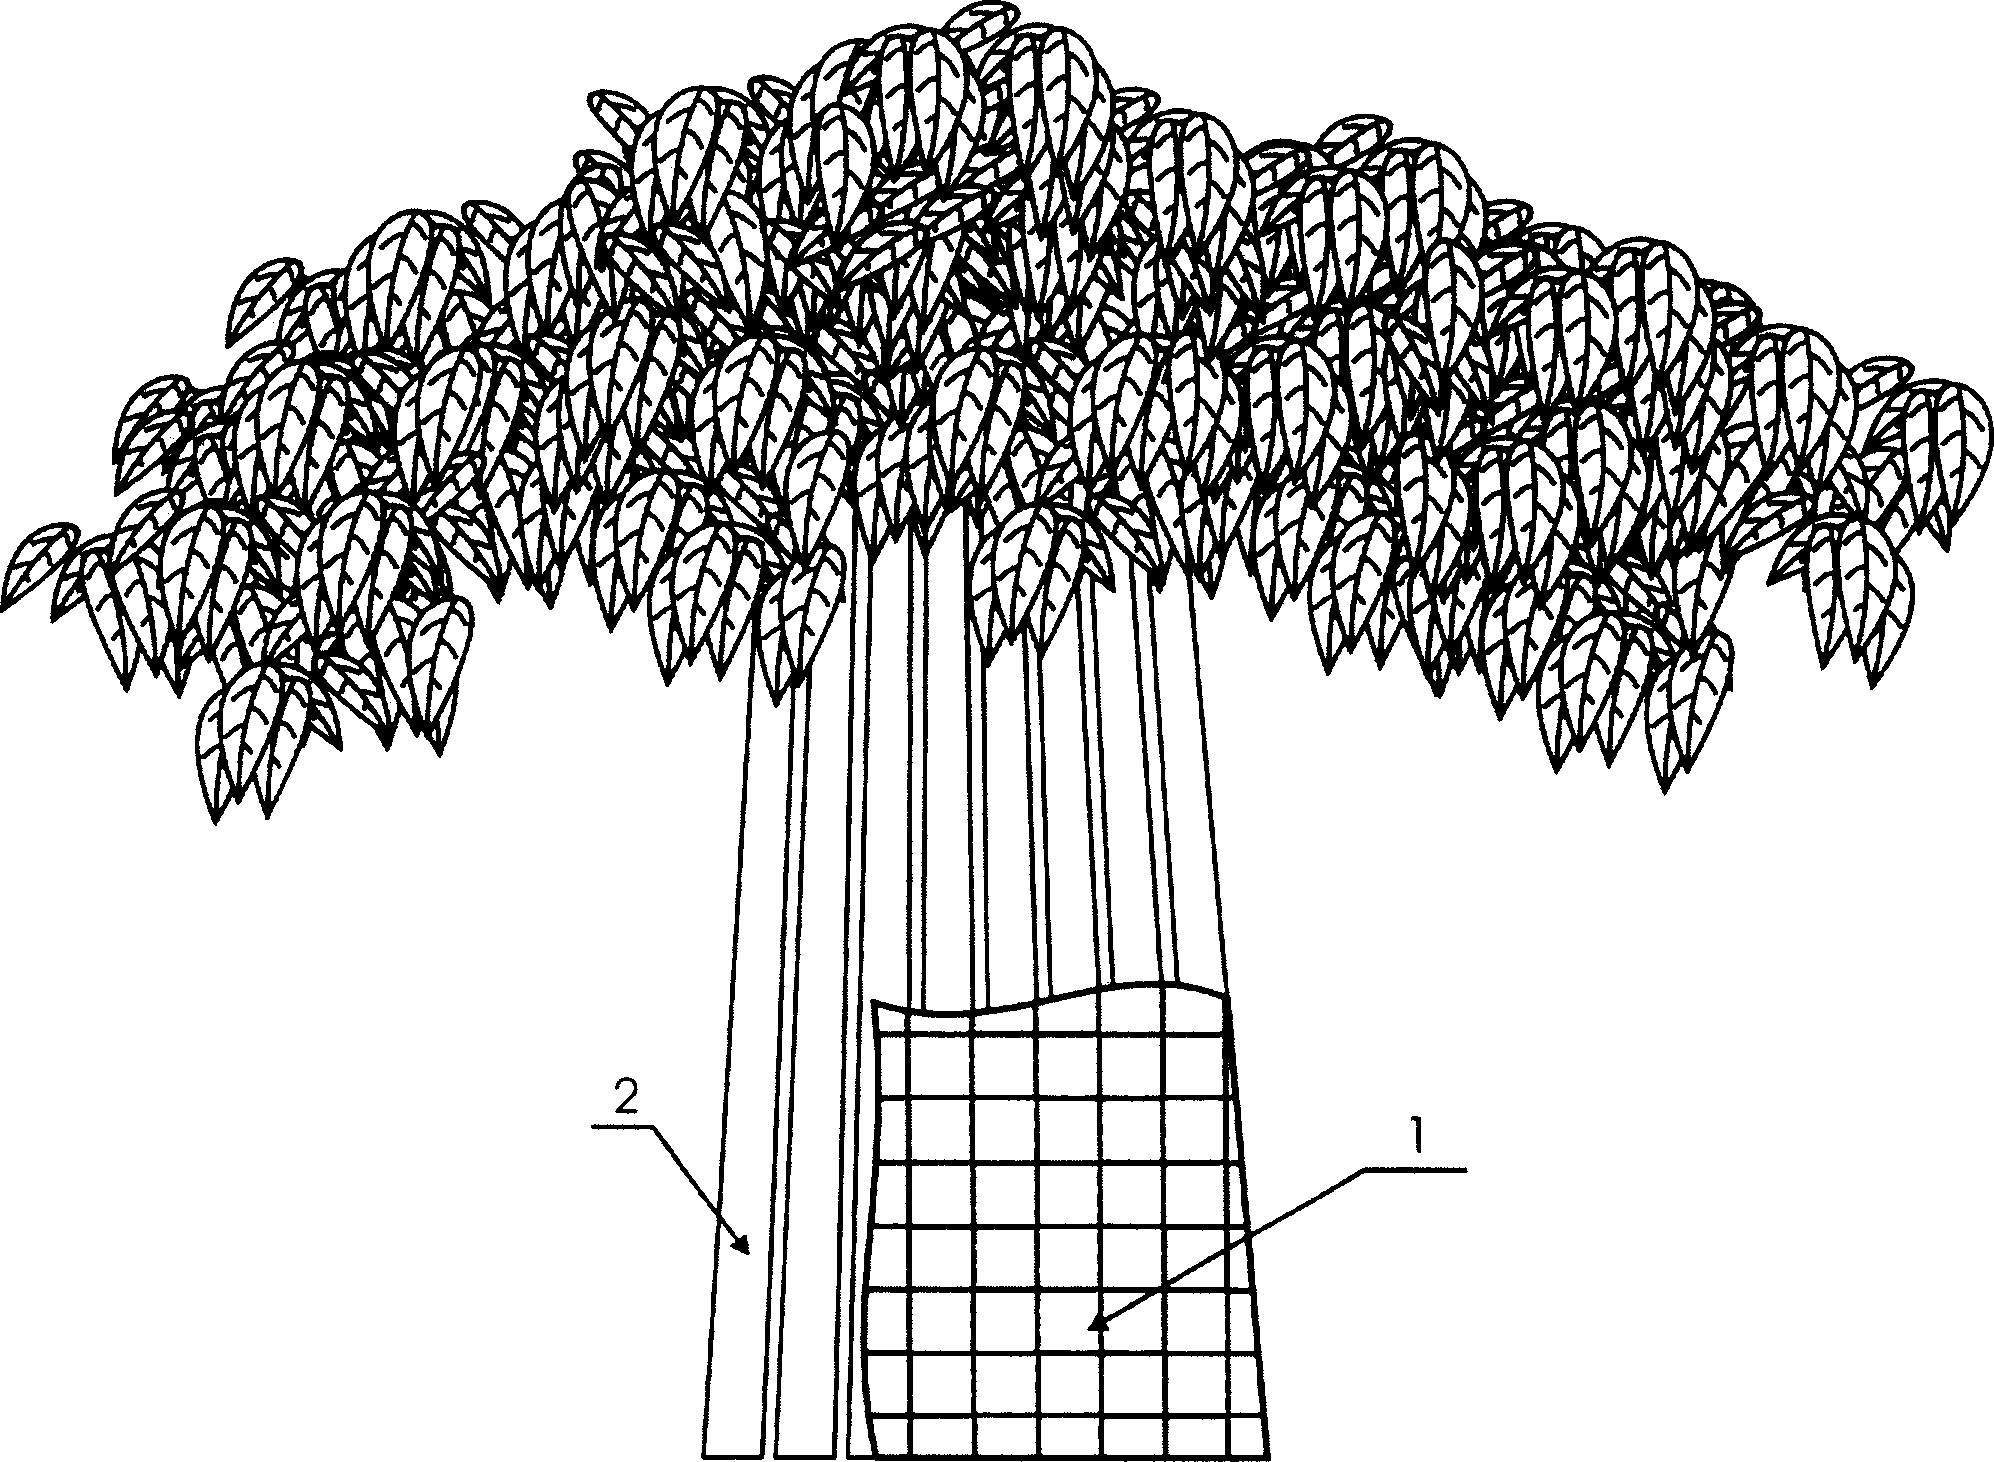 Banyan framework cultivating method